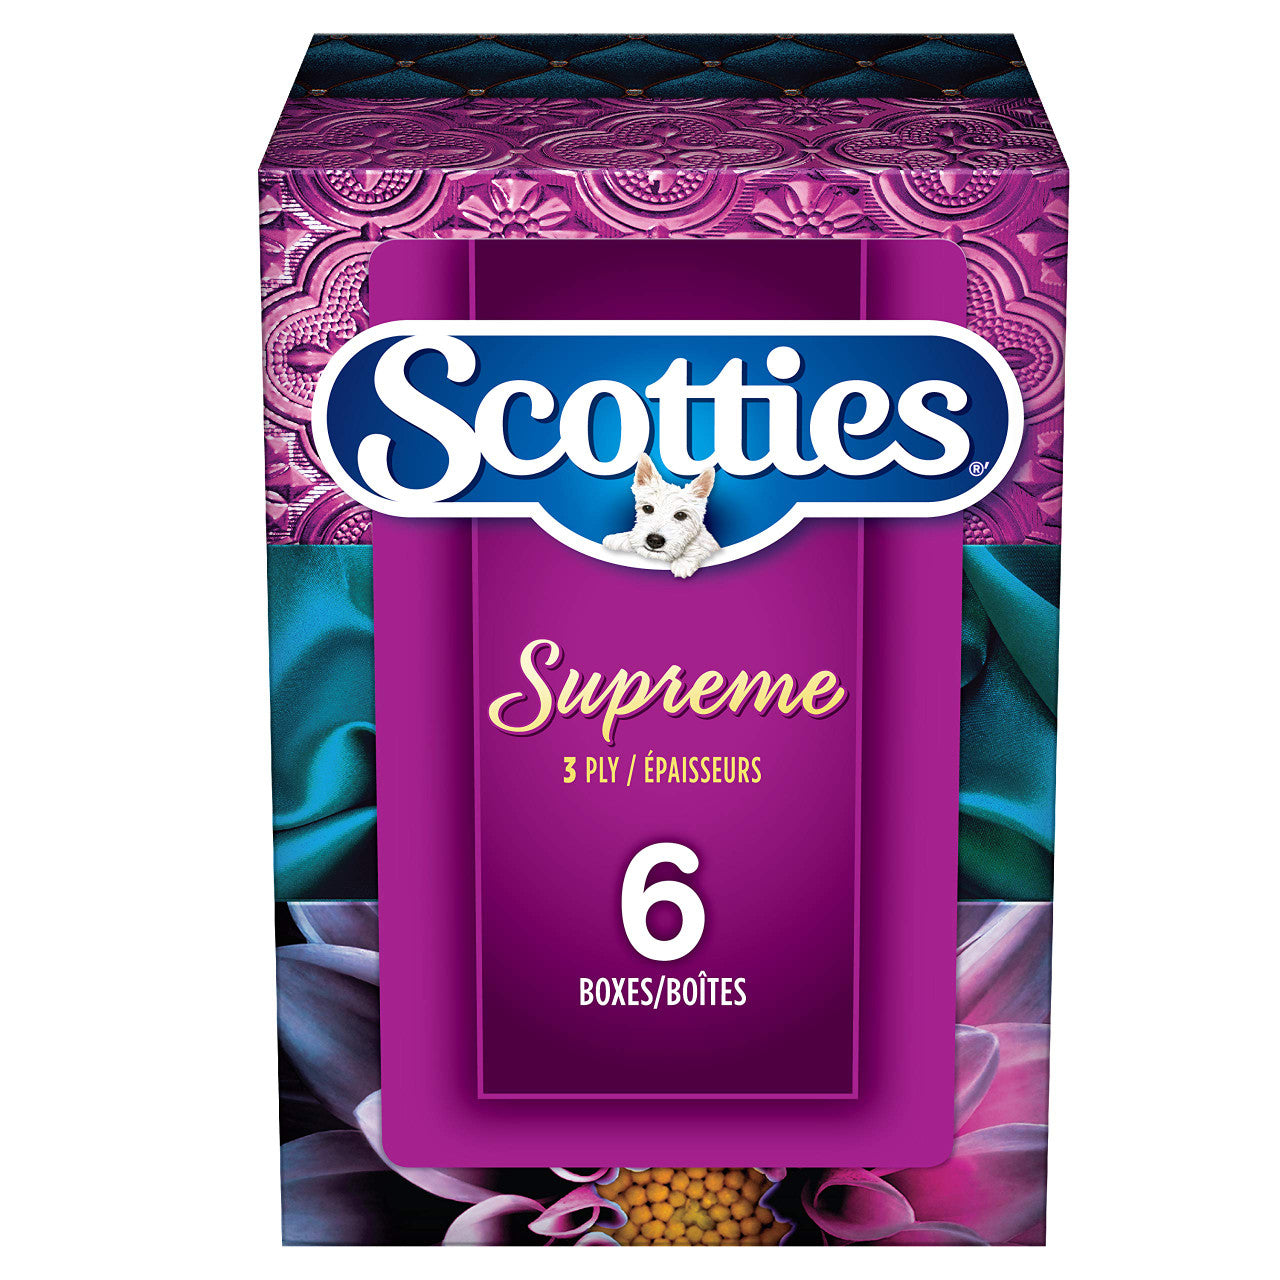 Scotties Supreme Facial Tissue, 3-ply, 88 sheets per box -6pk {Canadian}